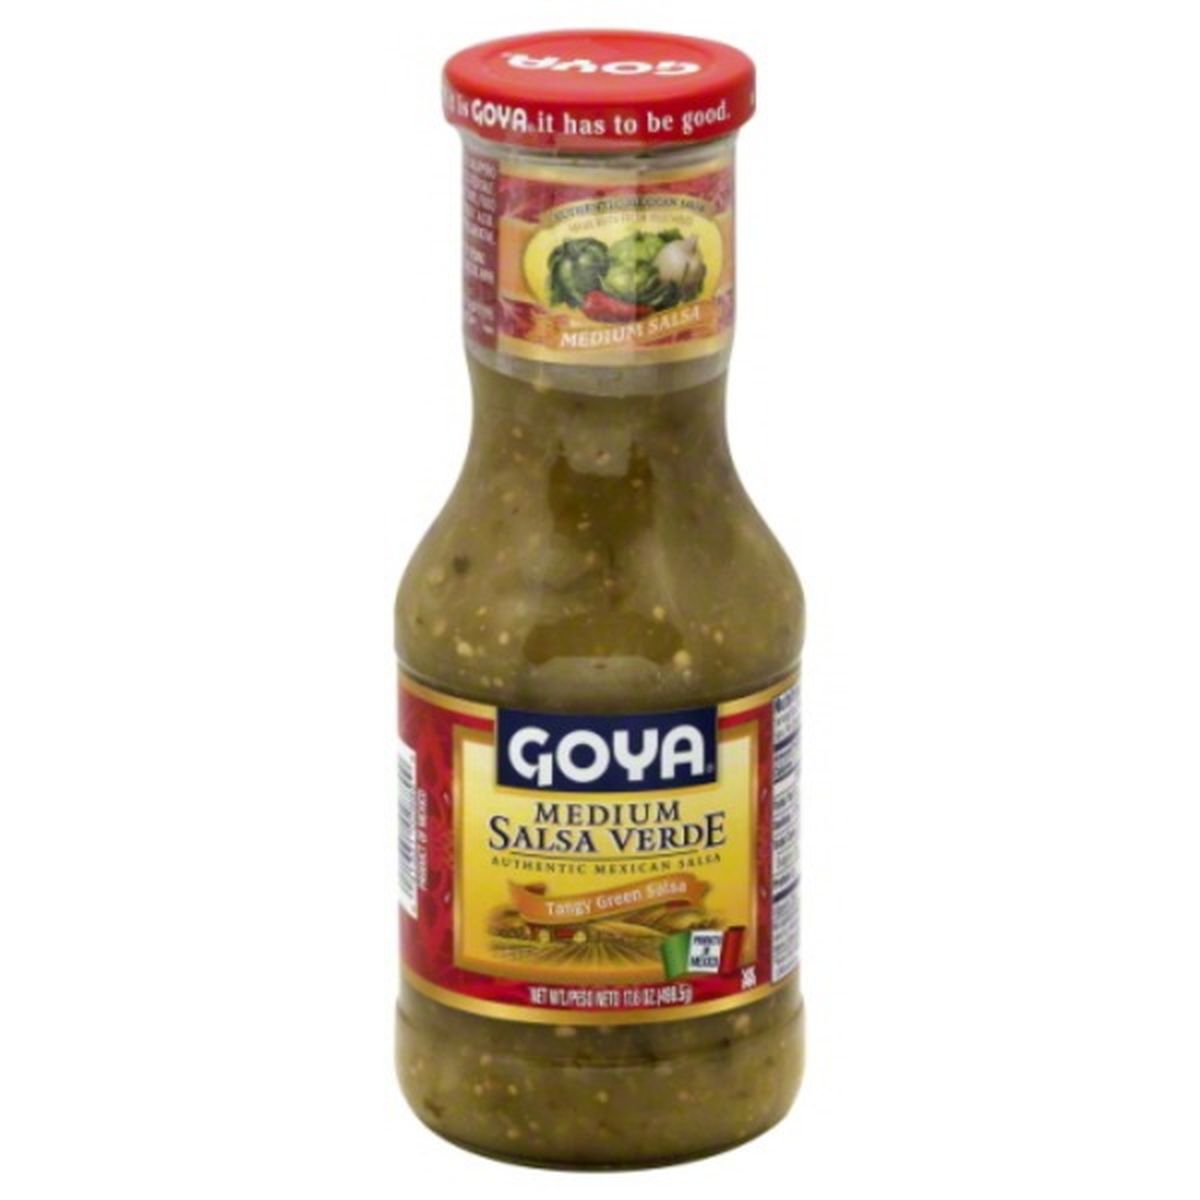 Calories in Goya Salsa Verde, Medium